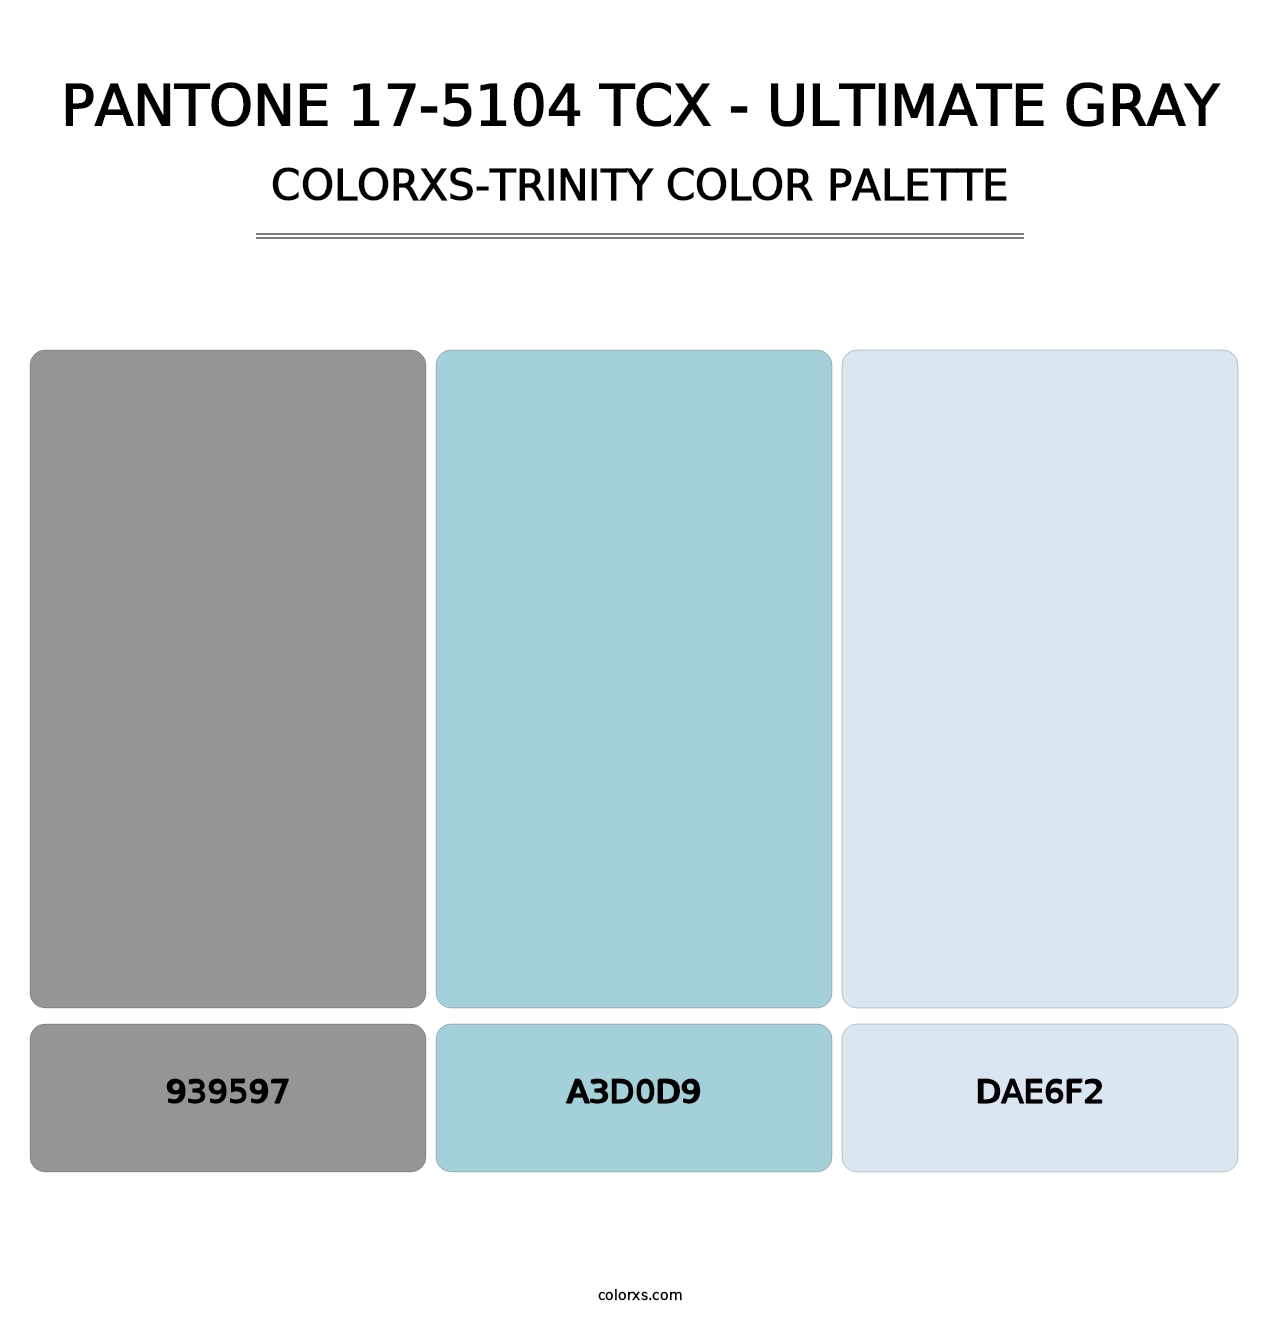 PANTONE 17-5104 TCX - Ultimate Gray - Colorxs Trinity Palette